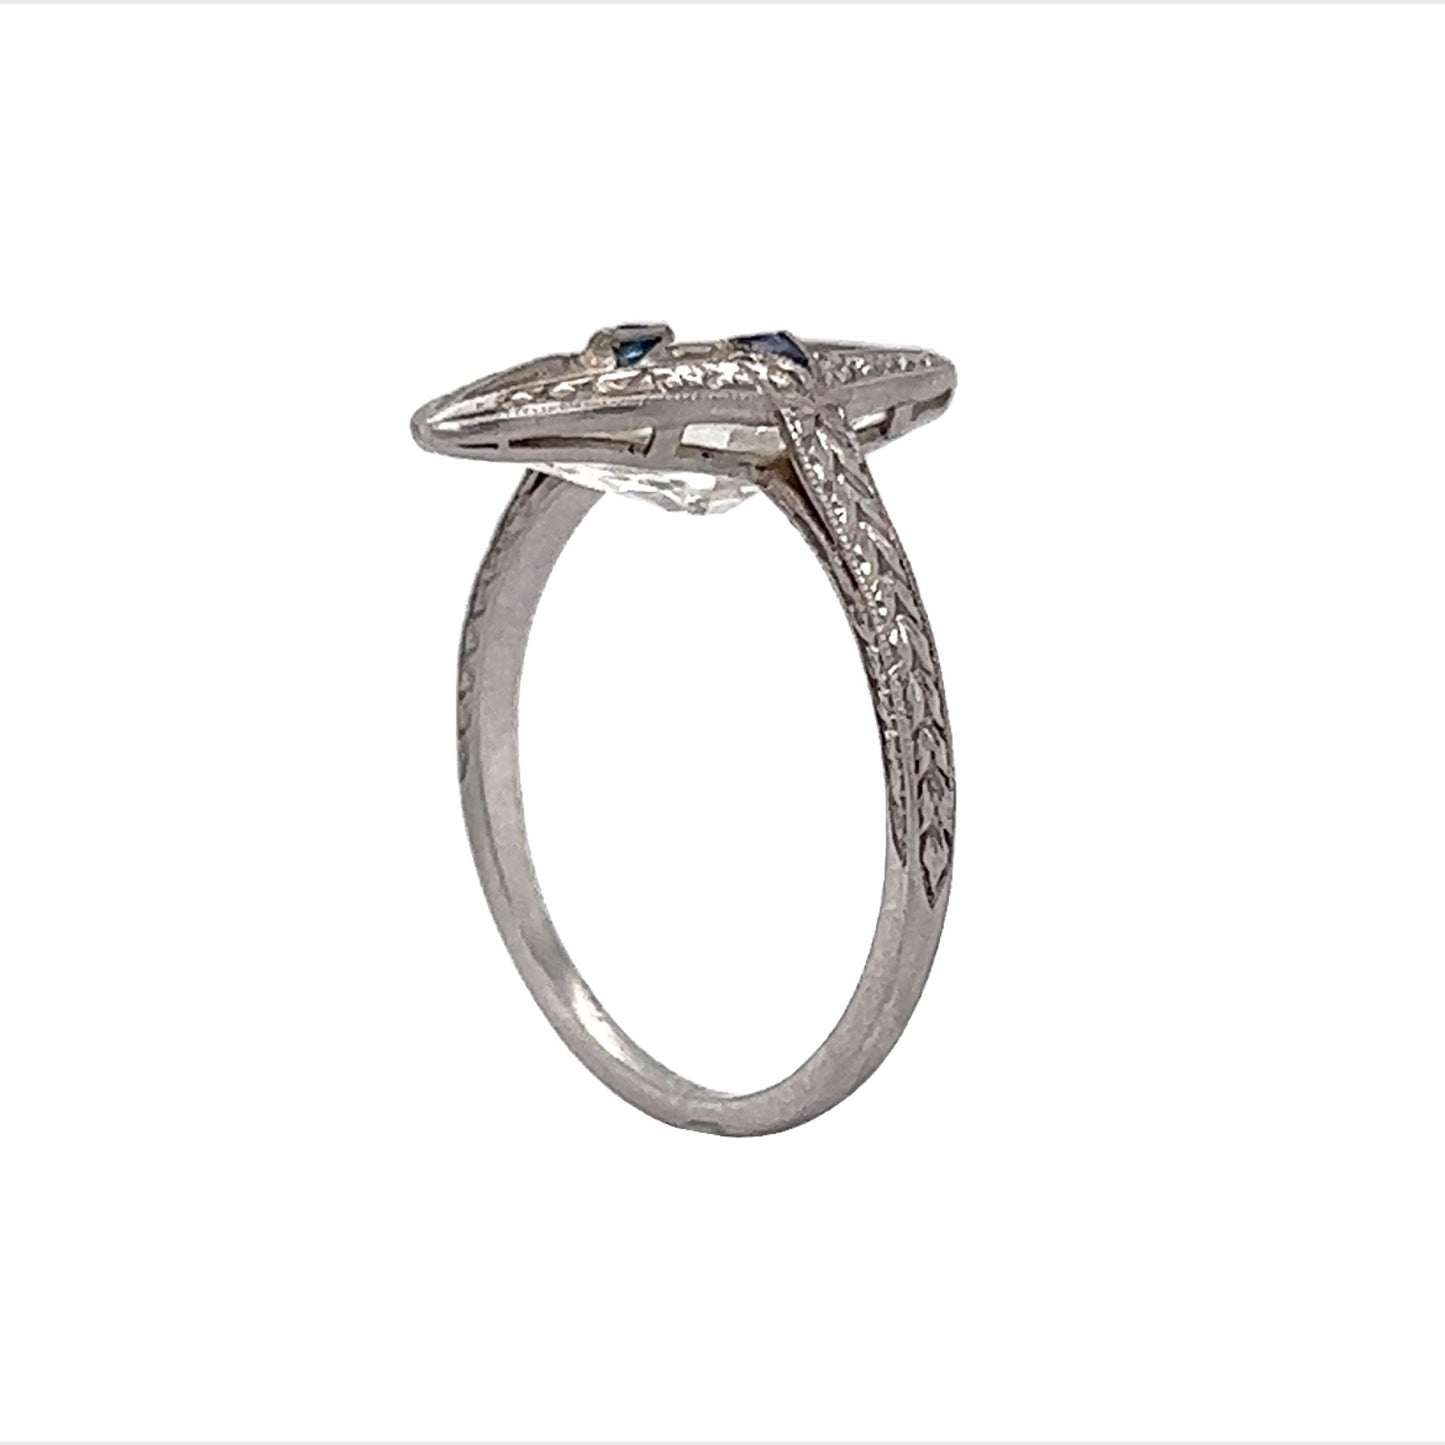 2.44 GIA Marquise Cut Diamond & Sapphire Ring in Platinum